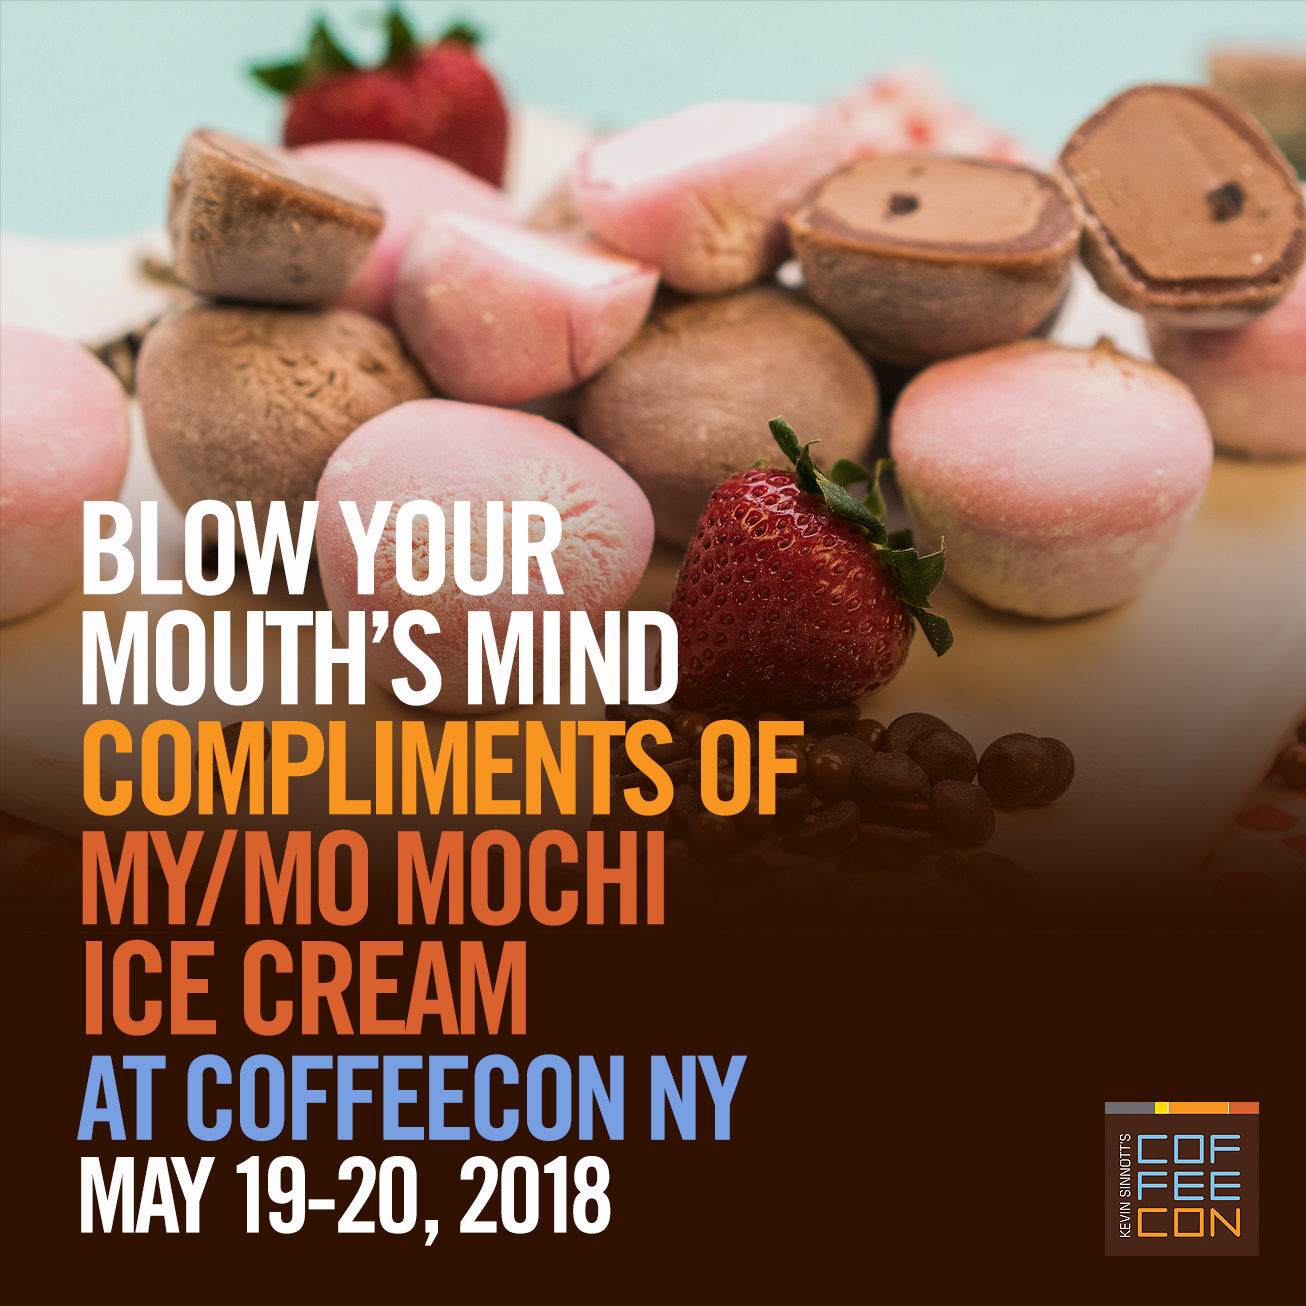 My/Mo Mochi Ice Cream at CoffeeConNY